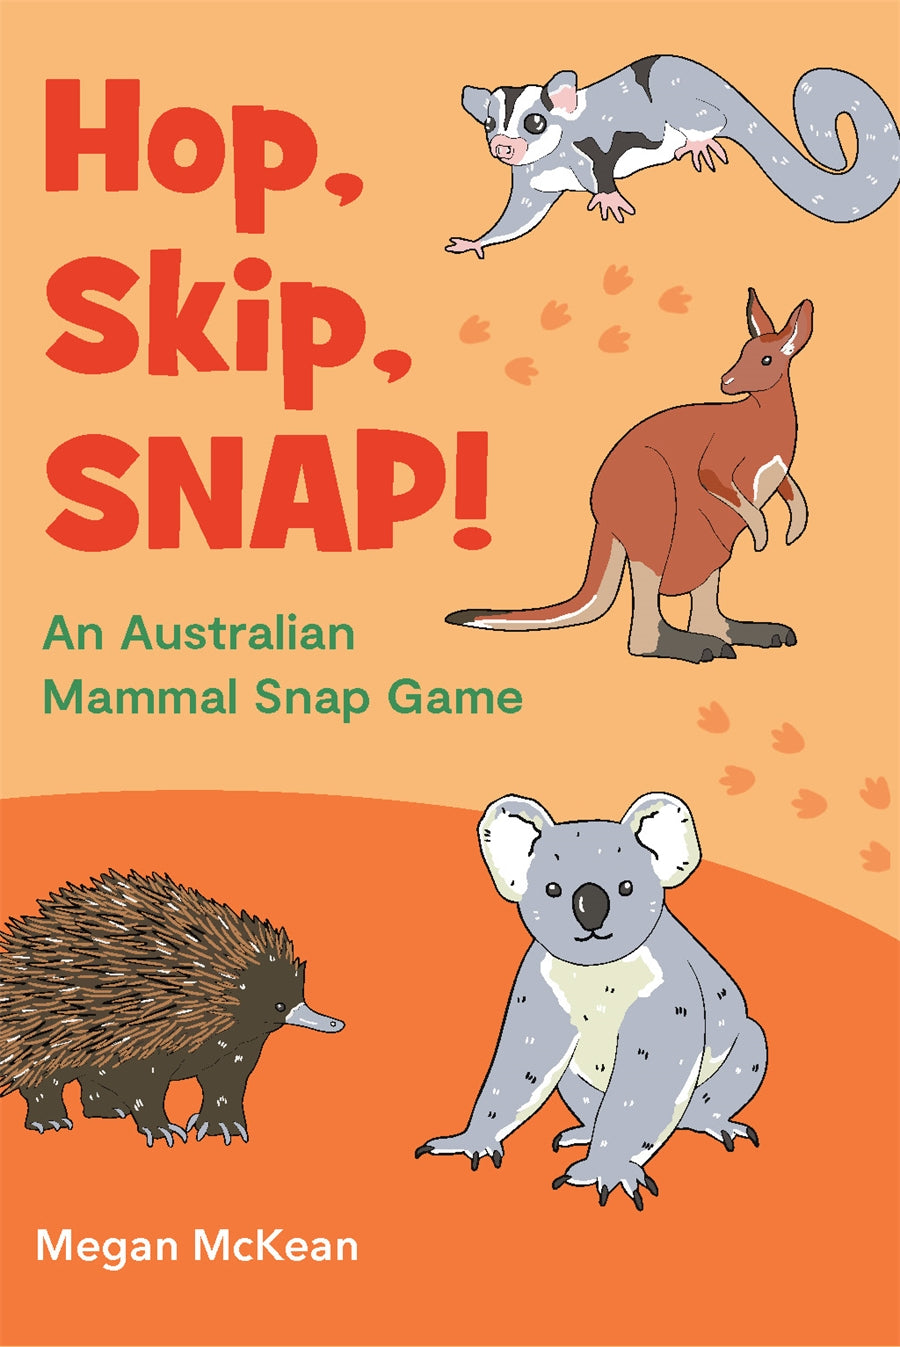 Illustrations of Australian animals.